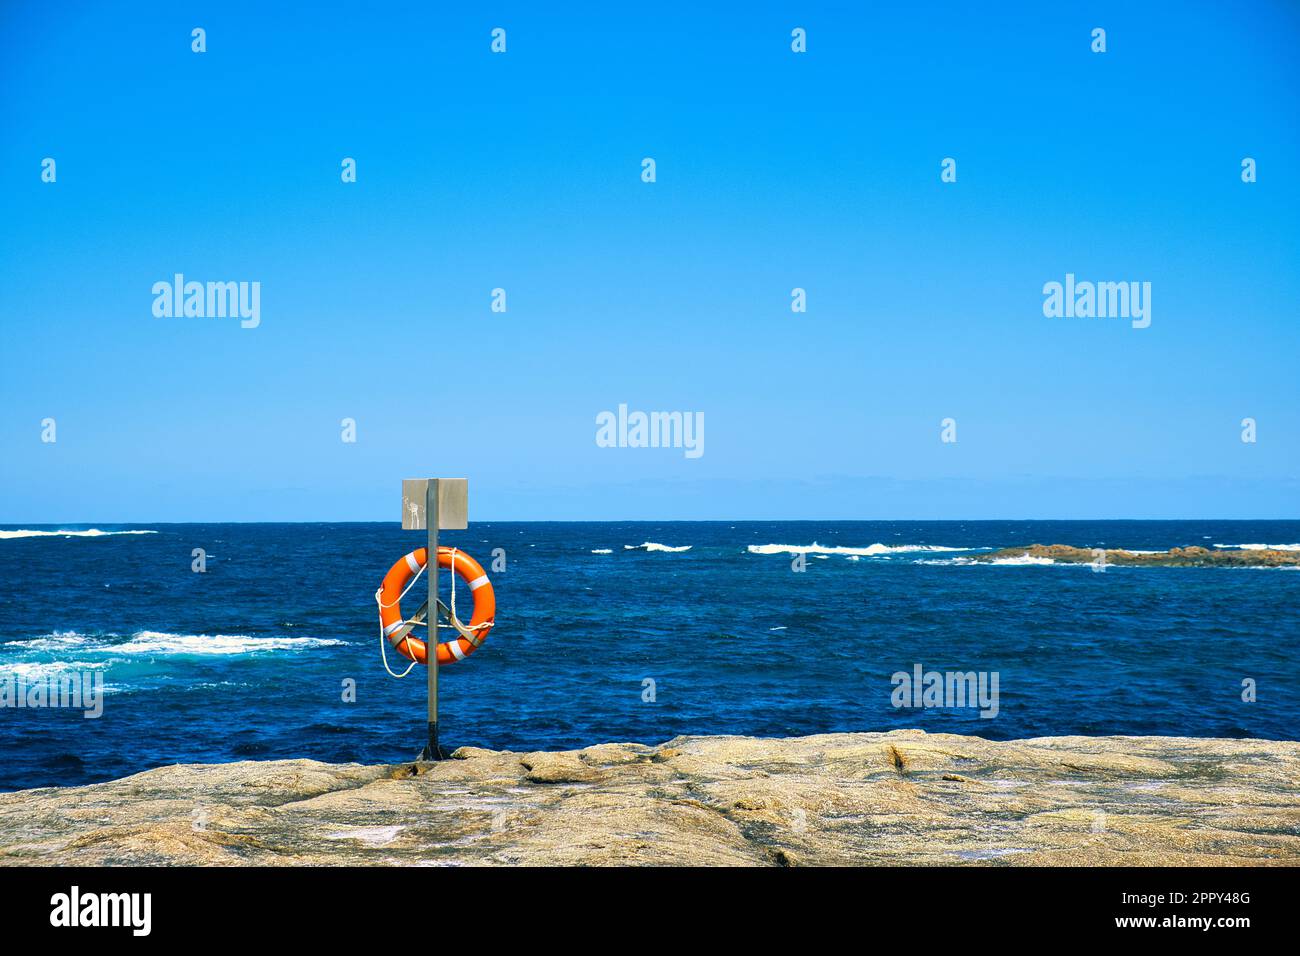 Lifebuoy on a rock by the sea. William Bay National Park, Western Australia. Stock Photo